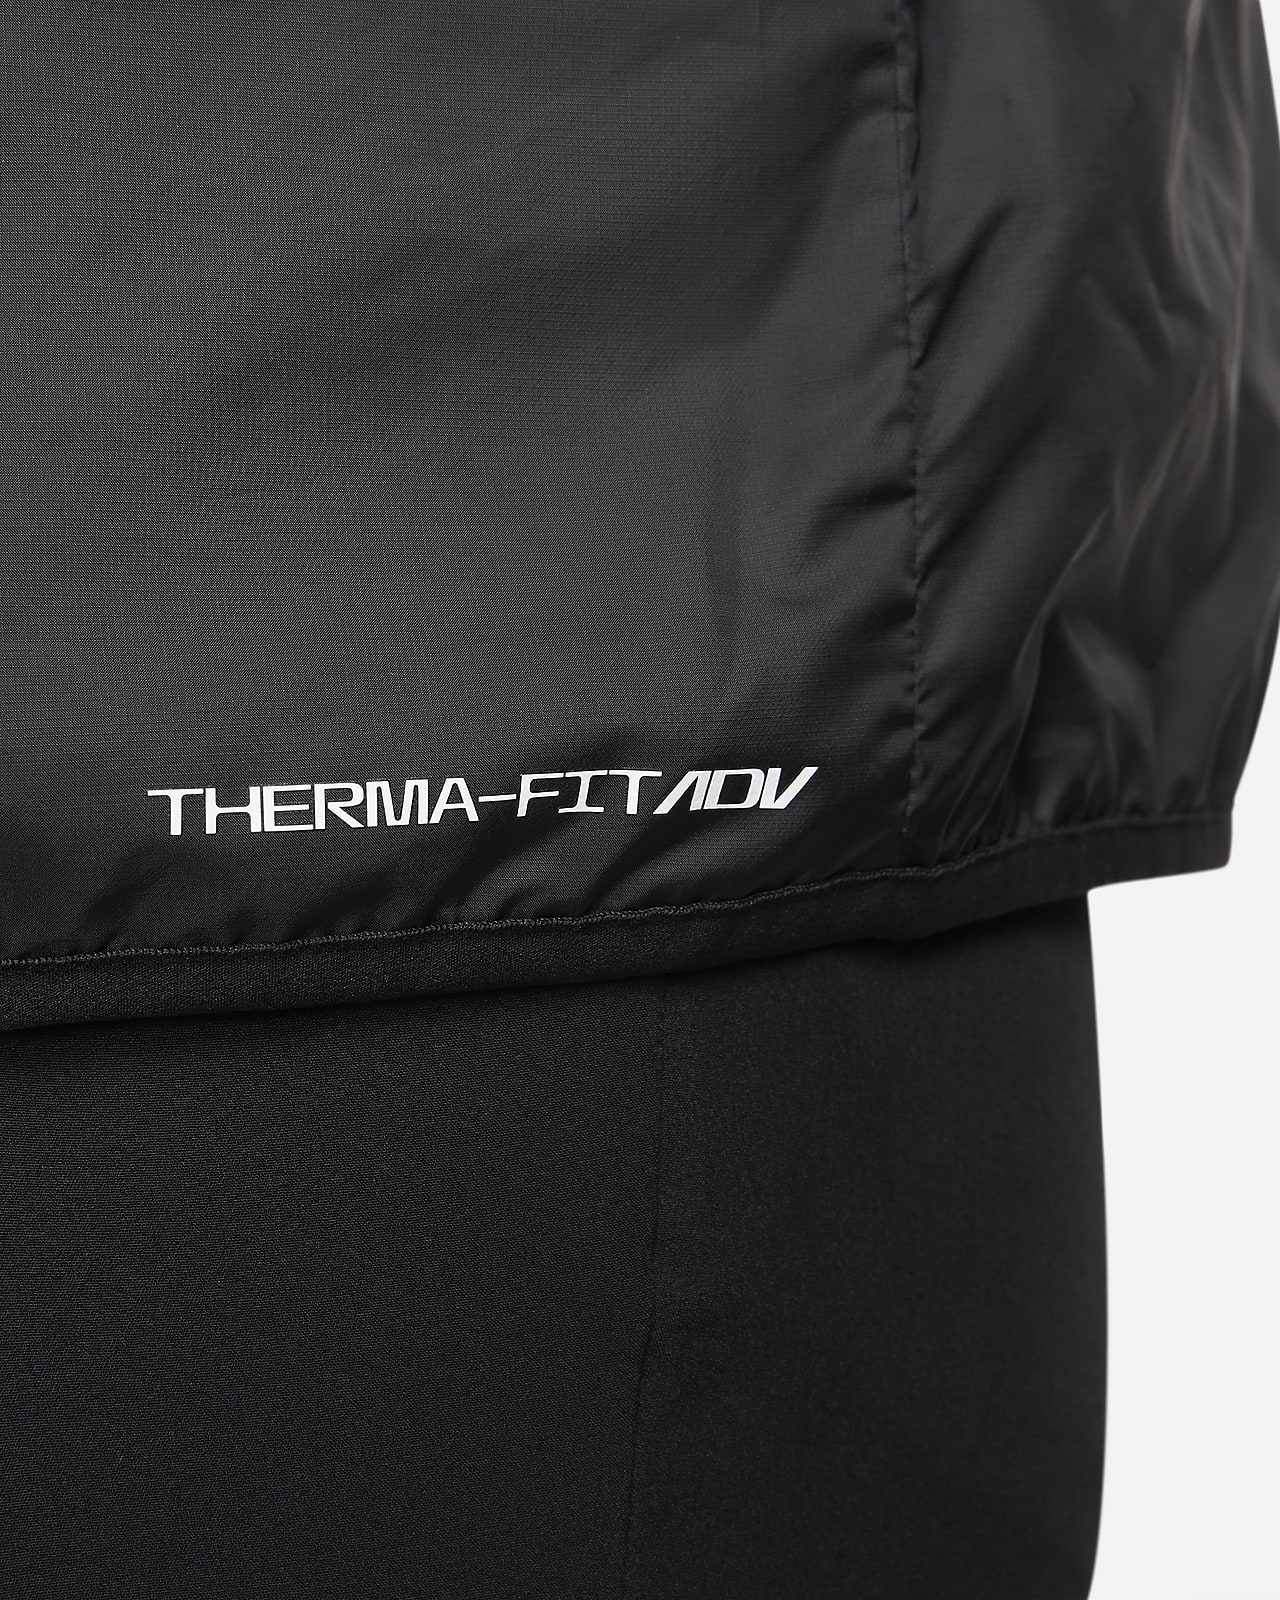 Nike Sportswear Therma-FIT Repel Hooded Jacket (Black) DJ6995-010 – Allike  Store